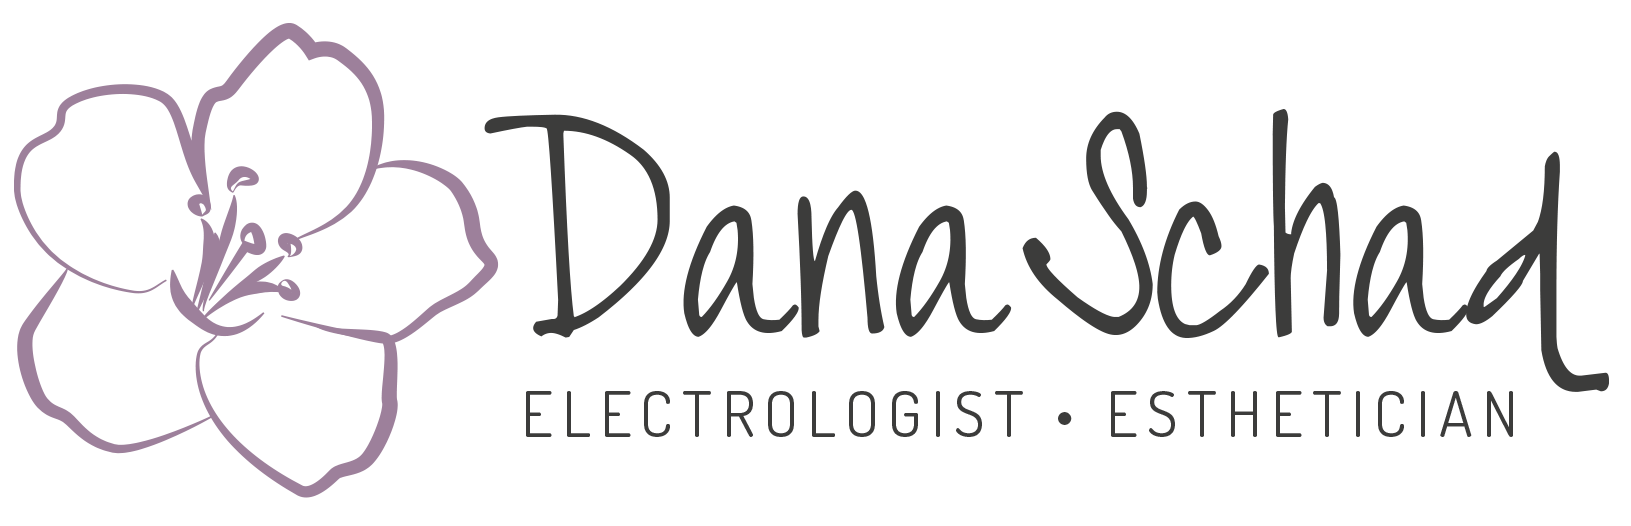 Dana Schad – Electrolysis & Skin Care